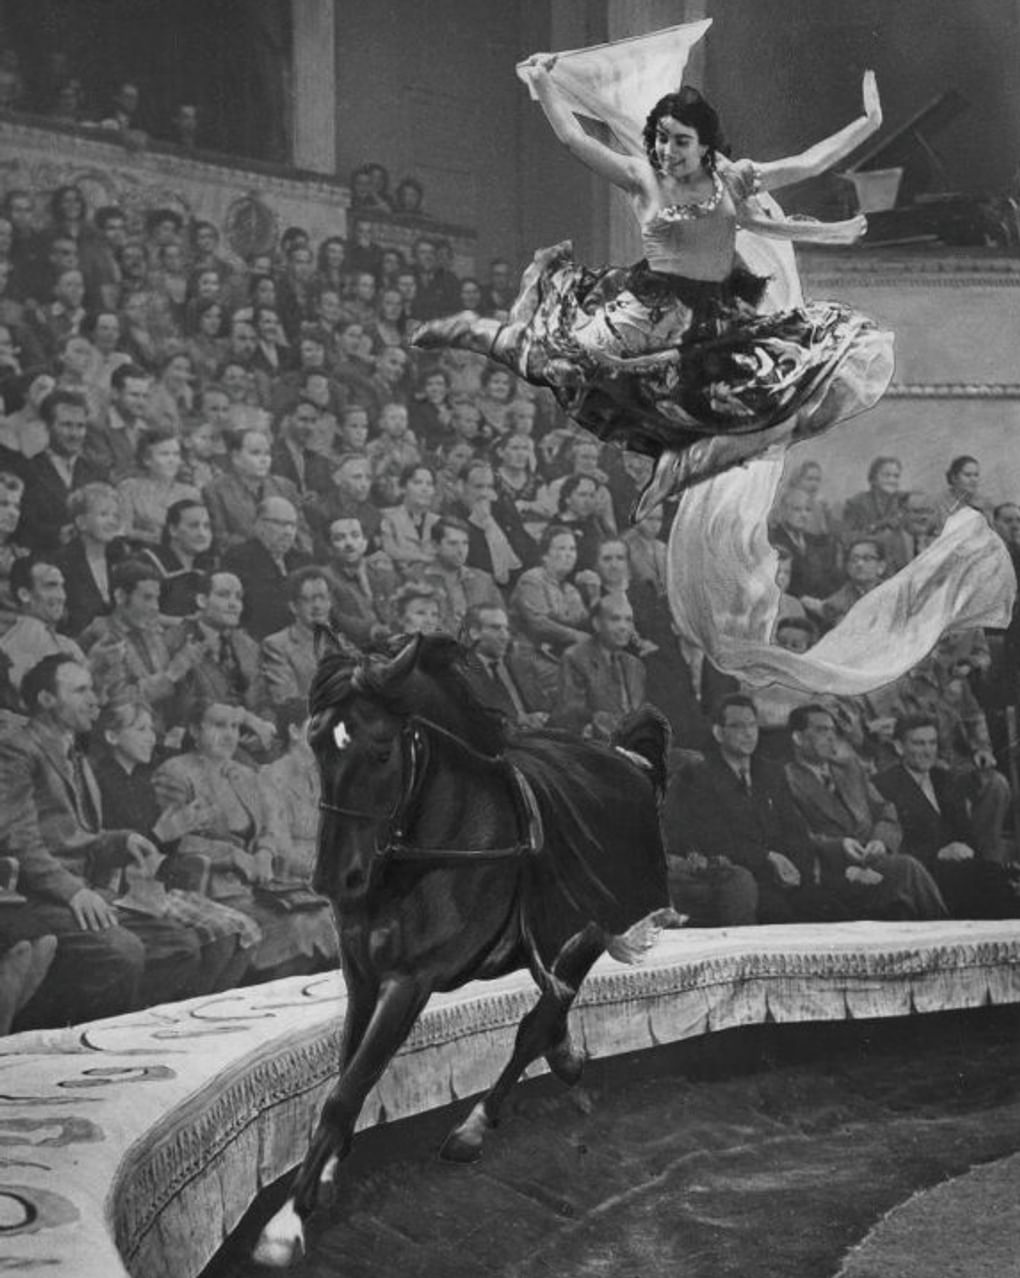 Вторая жена Алексея Баталова — цирковая артистка Гитана Леонтенко. 1950-е годы. Фотография: Семен Мишин-Моргенштерн / Мультимедиа Арт Музей, Москва